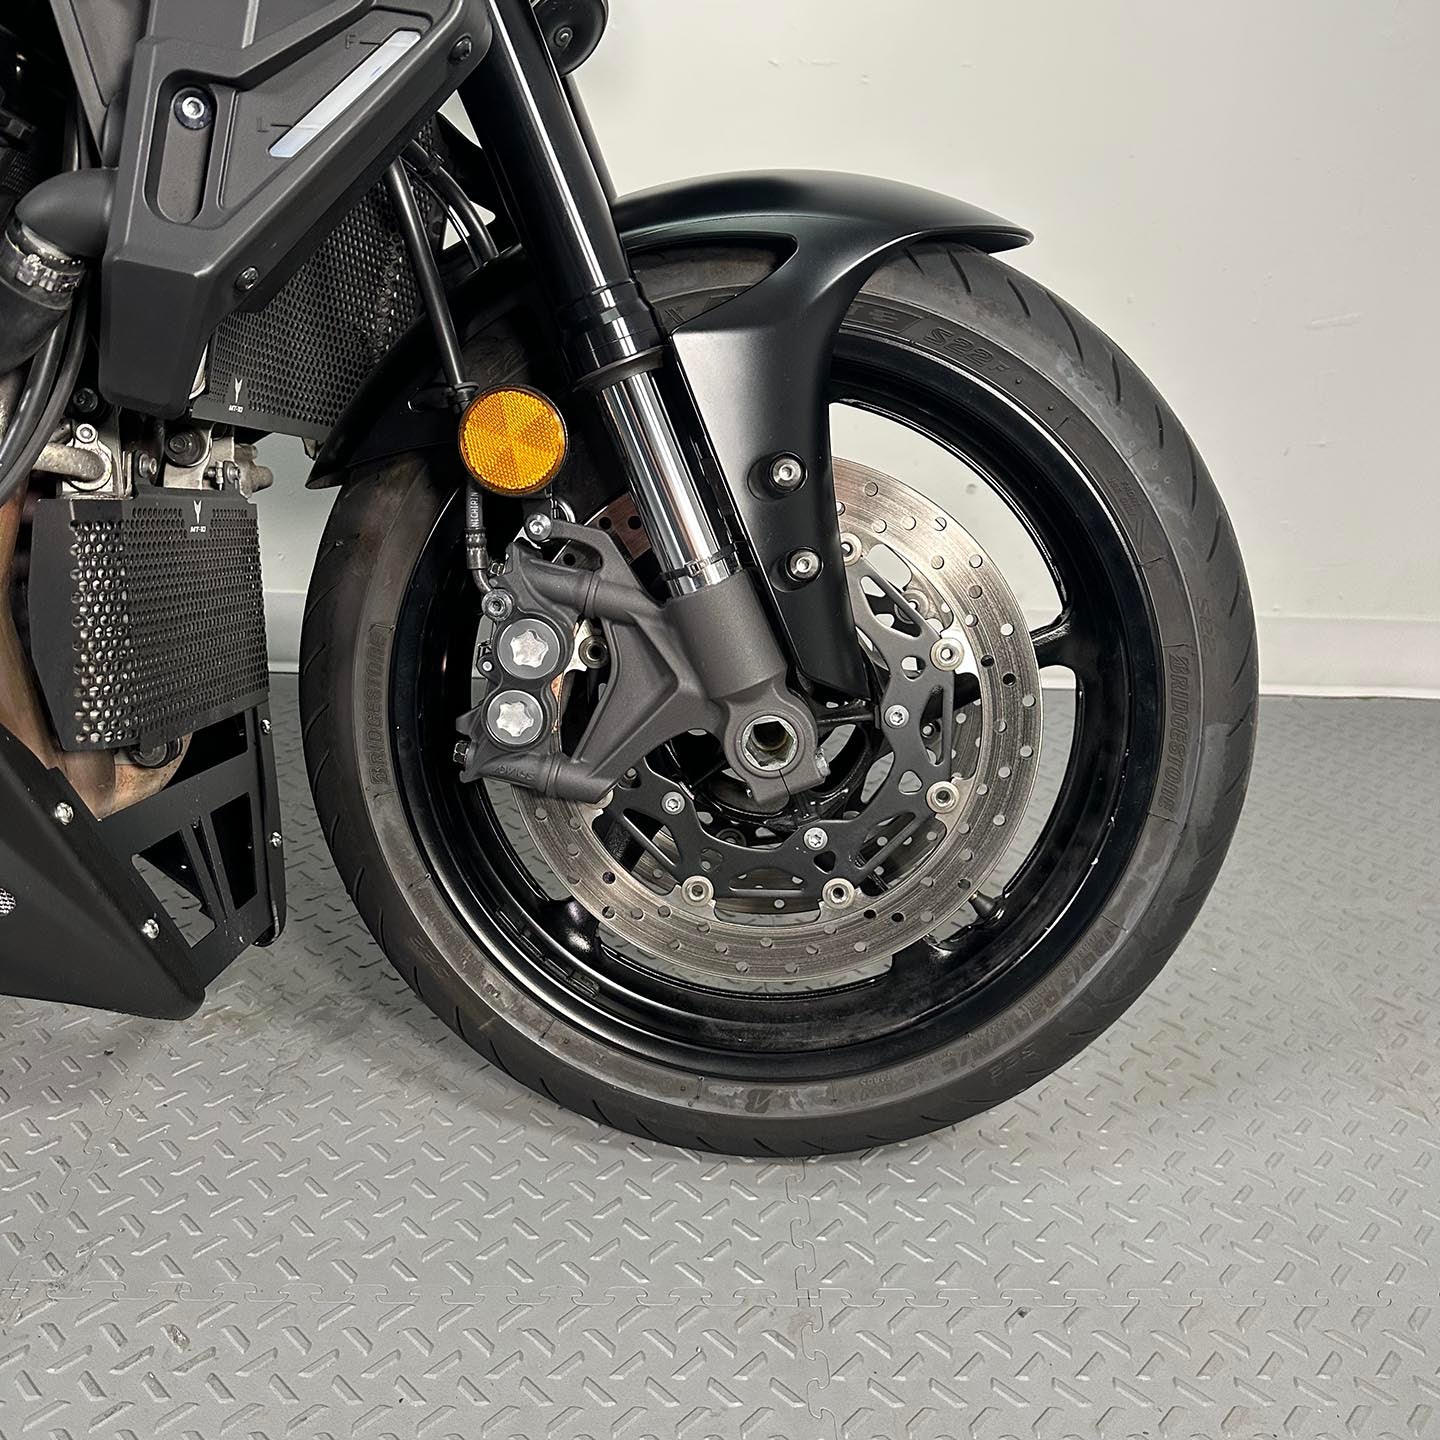 2019 Yamaha MT10 (7,753 Miles)